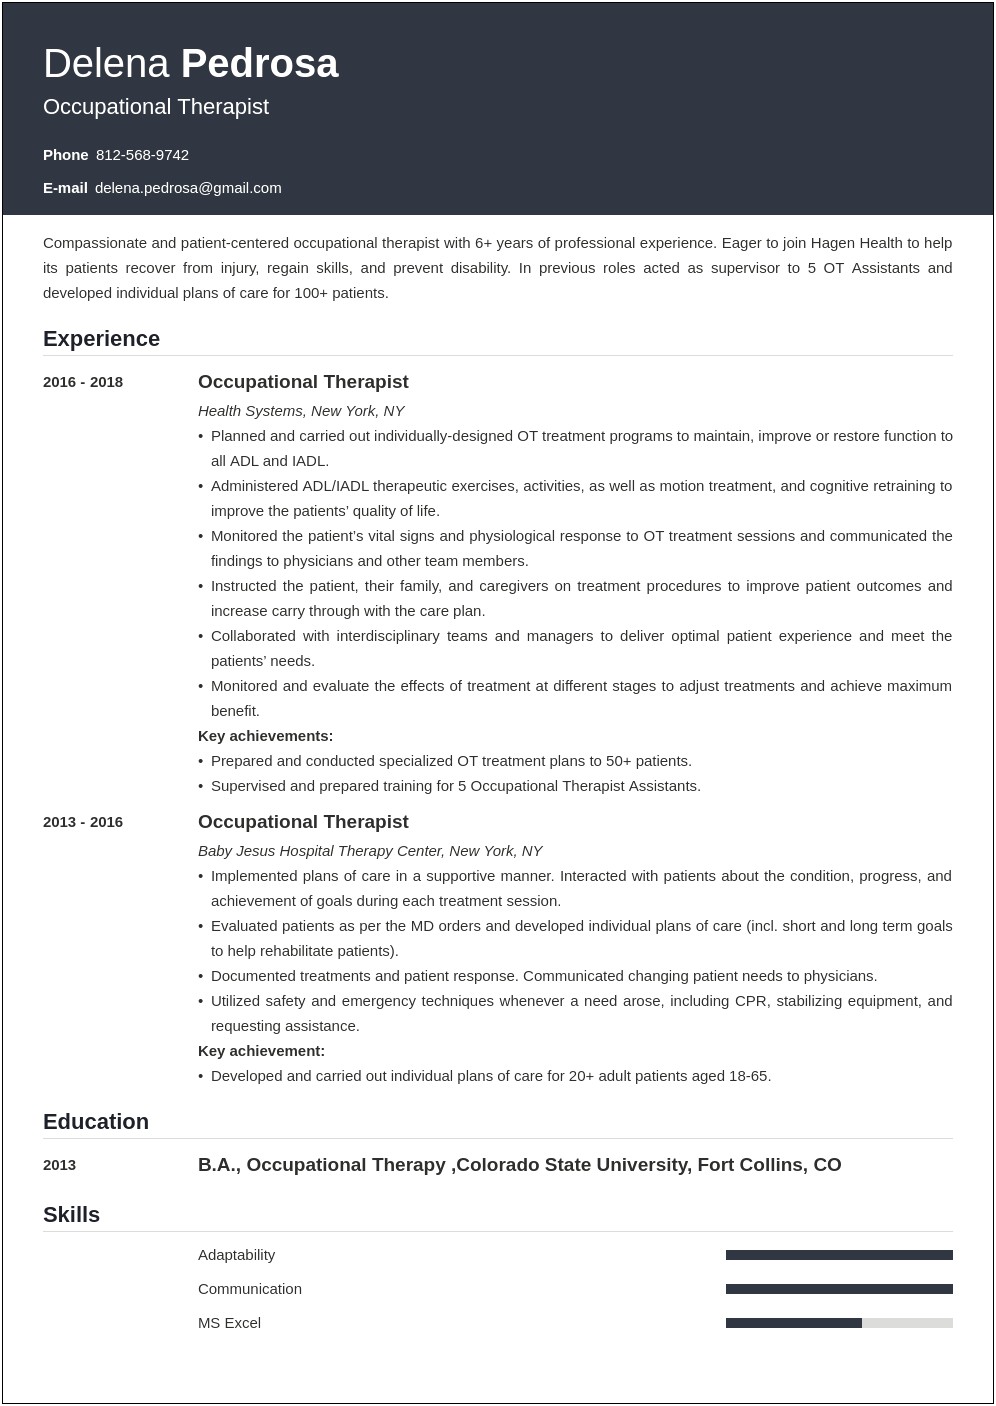 Occupational Therapist Job Description For Resume